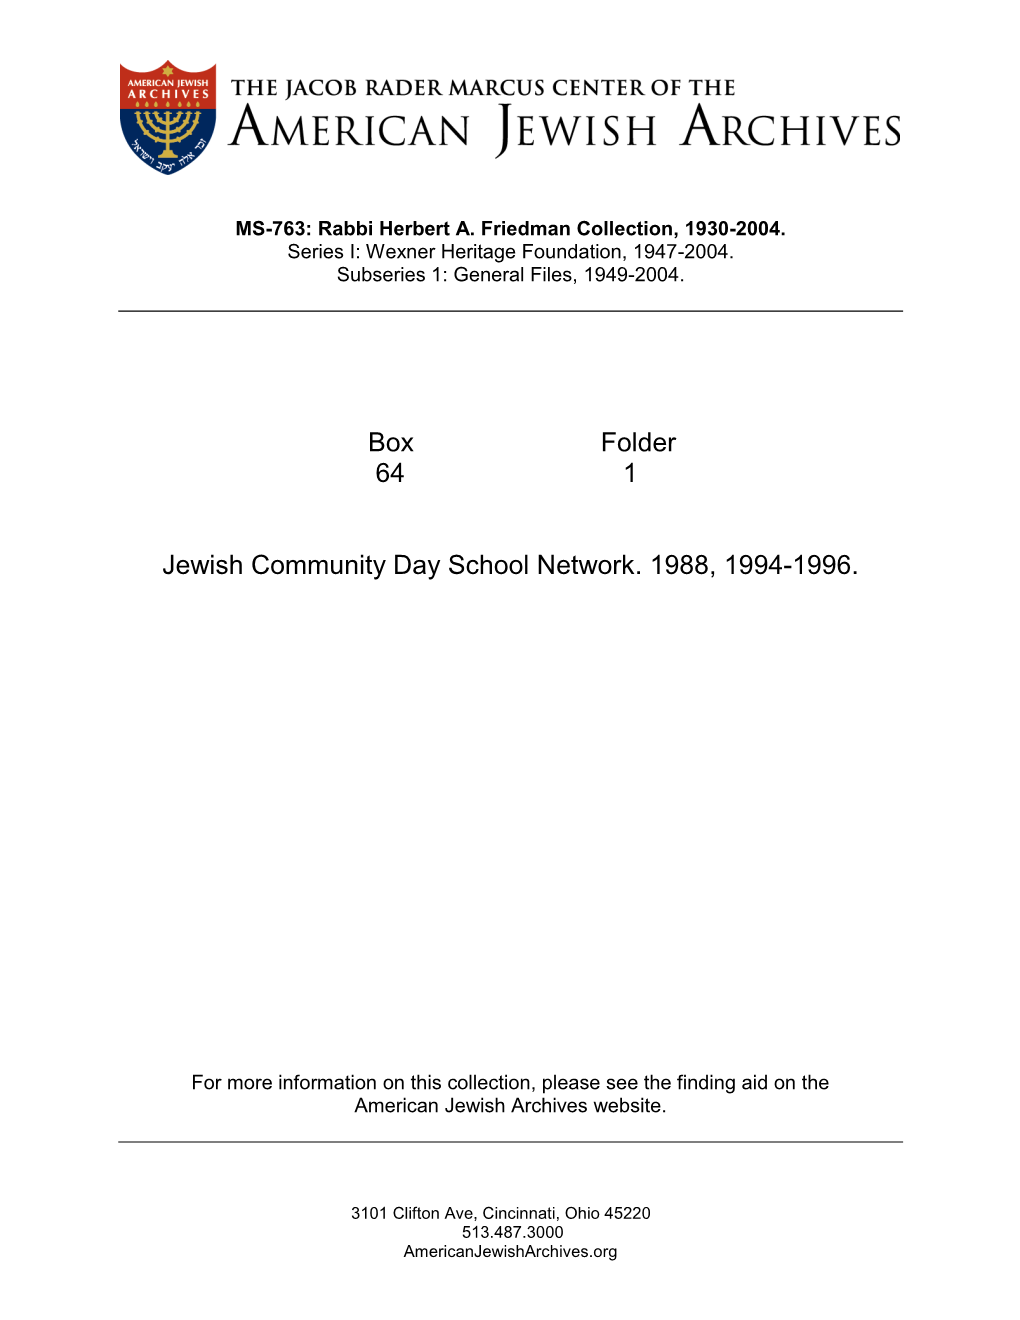 Box Folder 64 1 Jewish Community Day School Network. 1988, 1994